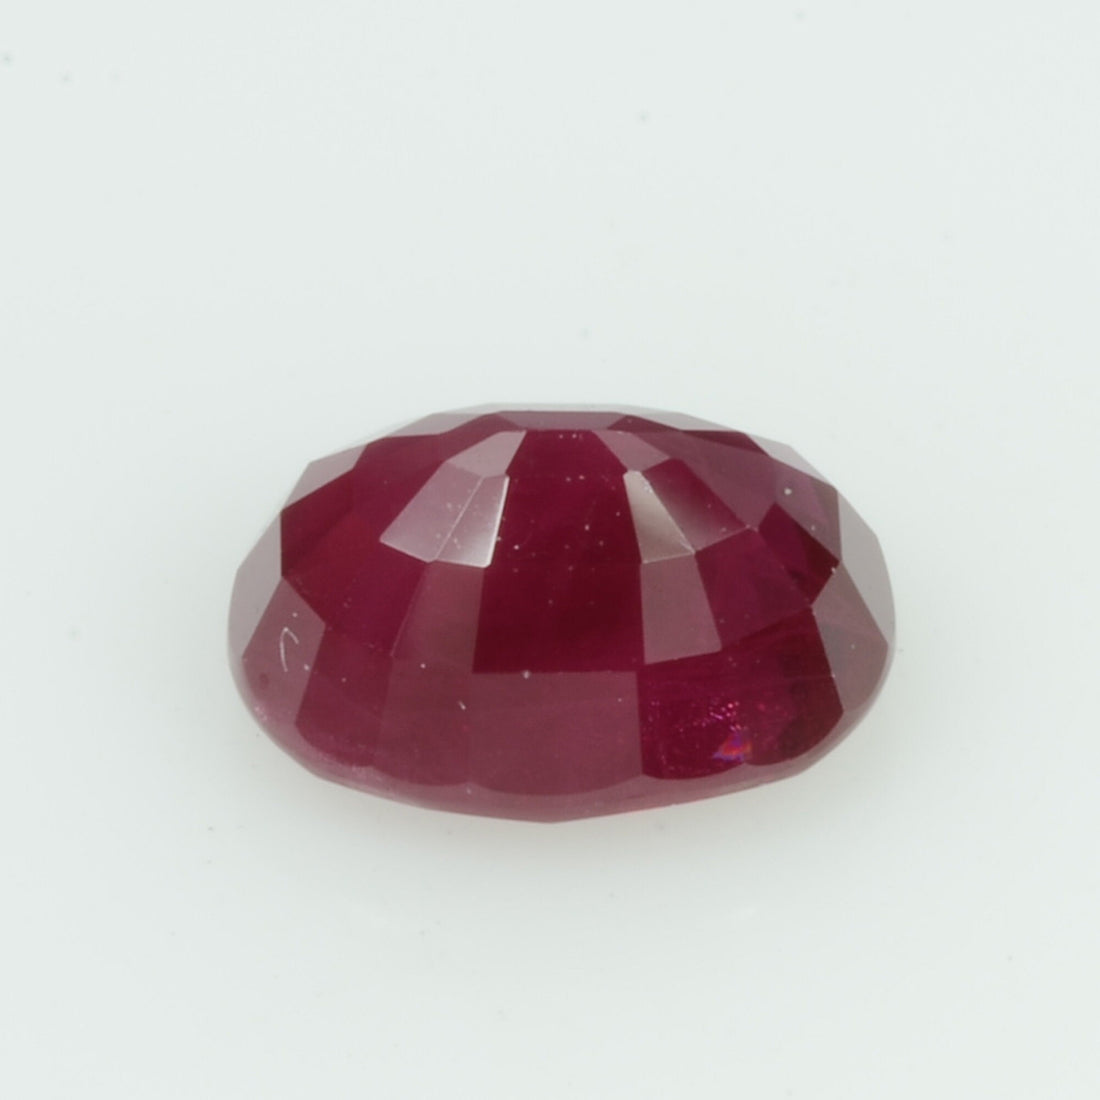 1.50 Cts Natural Burma Ruby Loose Gemstone Oval Cut